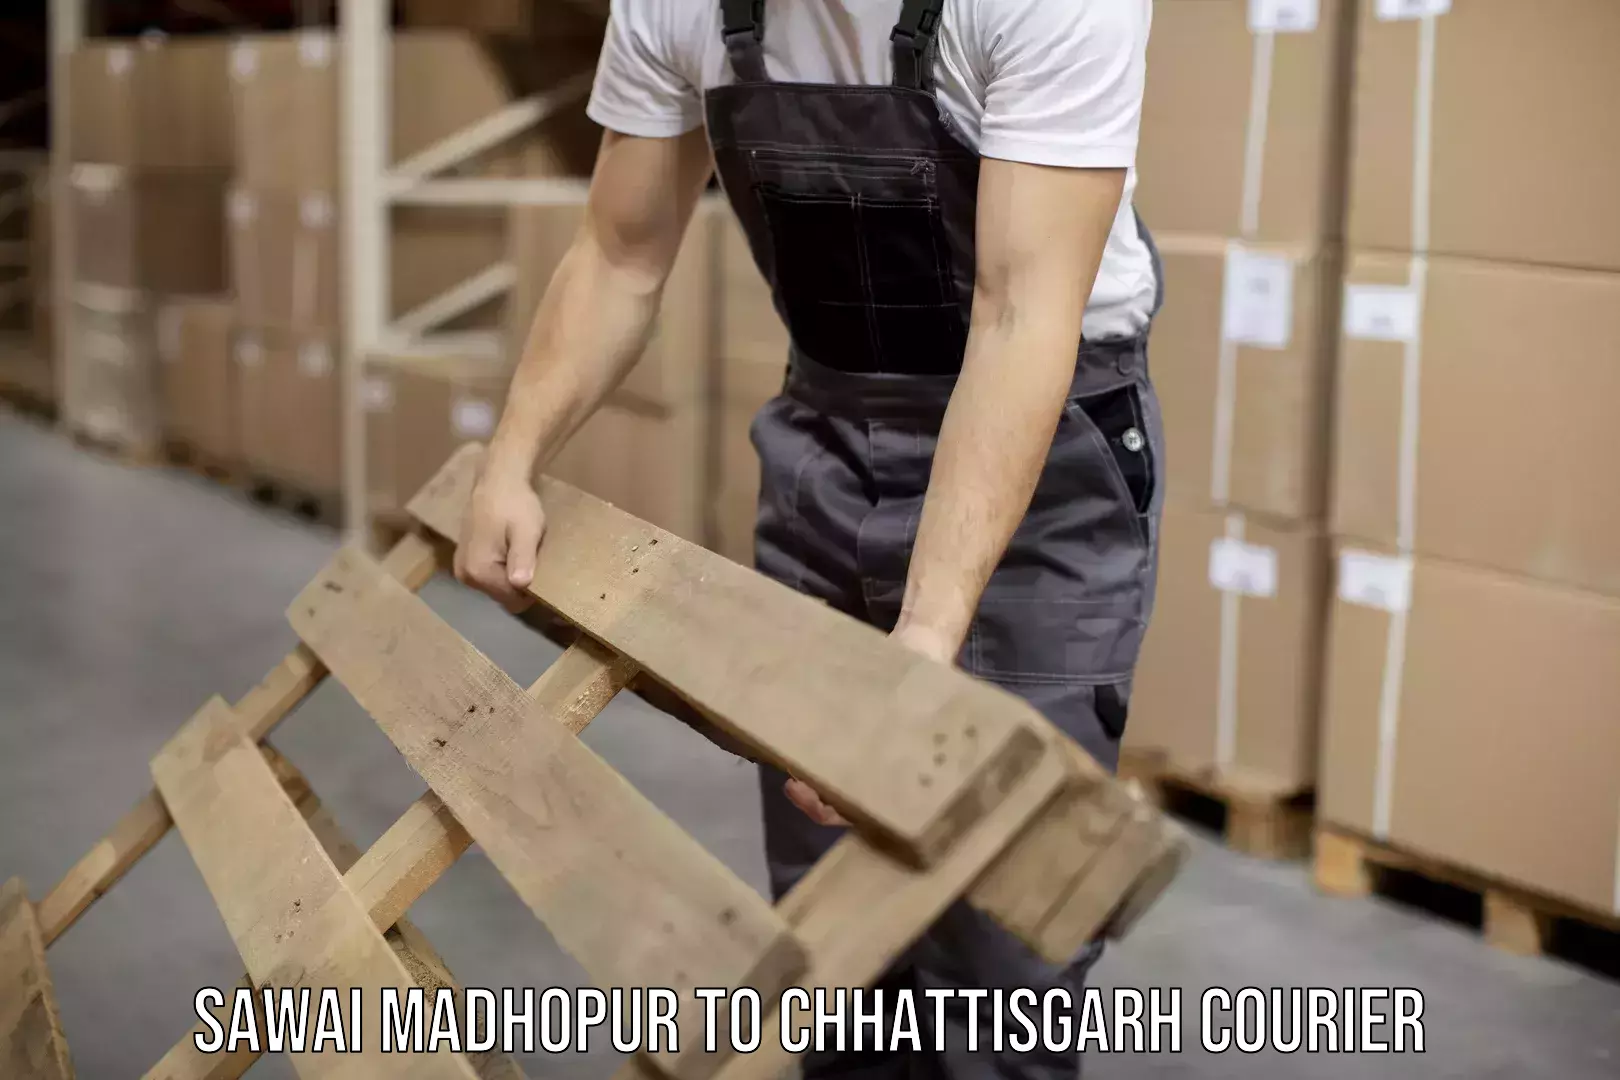 Courier service comparison Sawai Madhopur to Chhattisgarh